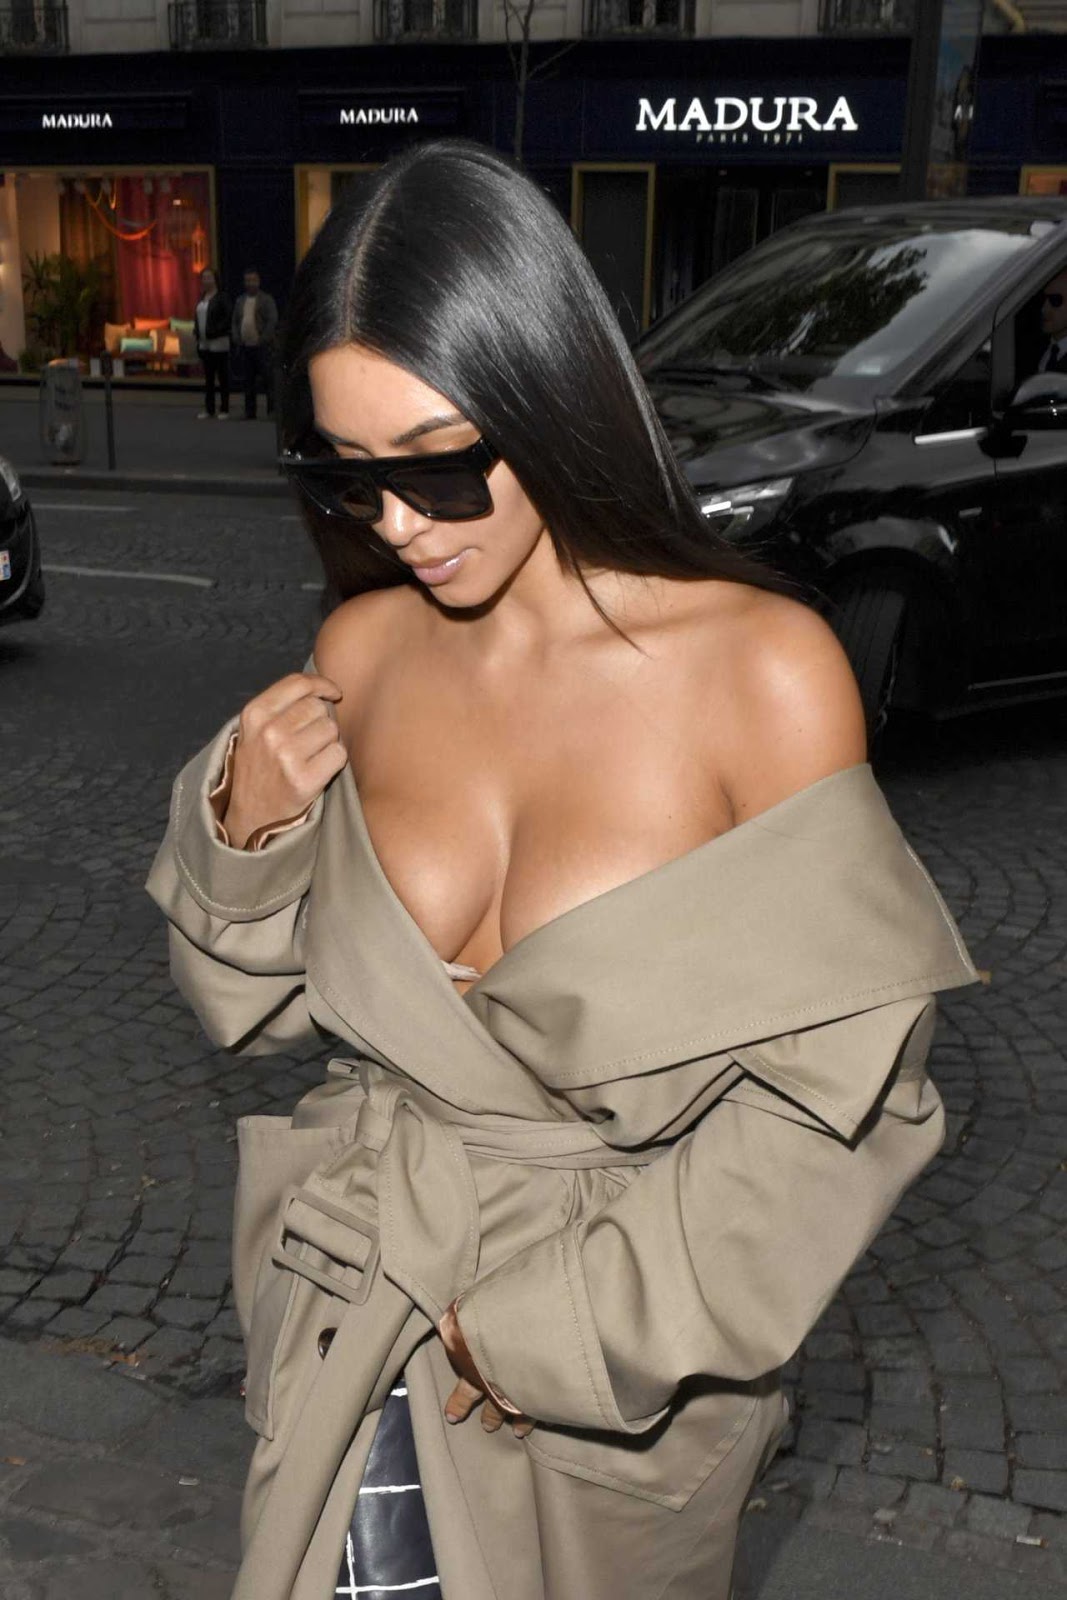 Was the Kim Kardashian heist an inside job?